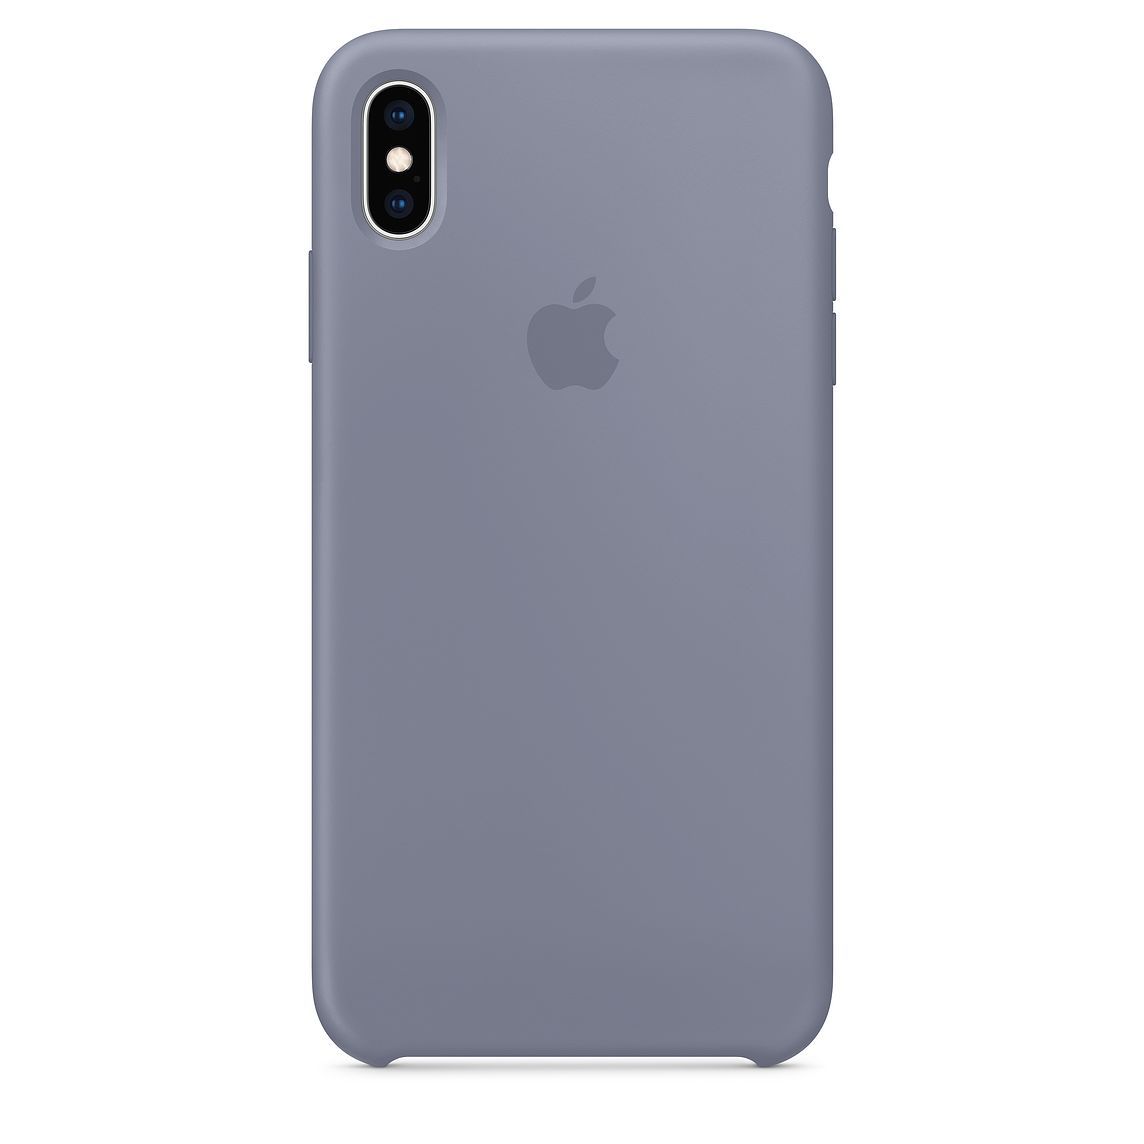 coque apple iphone xs max silicone